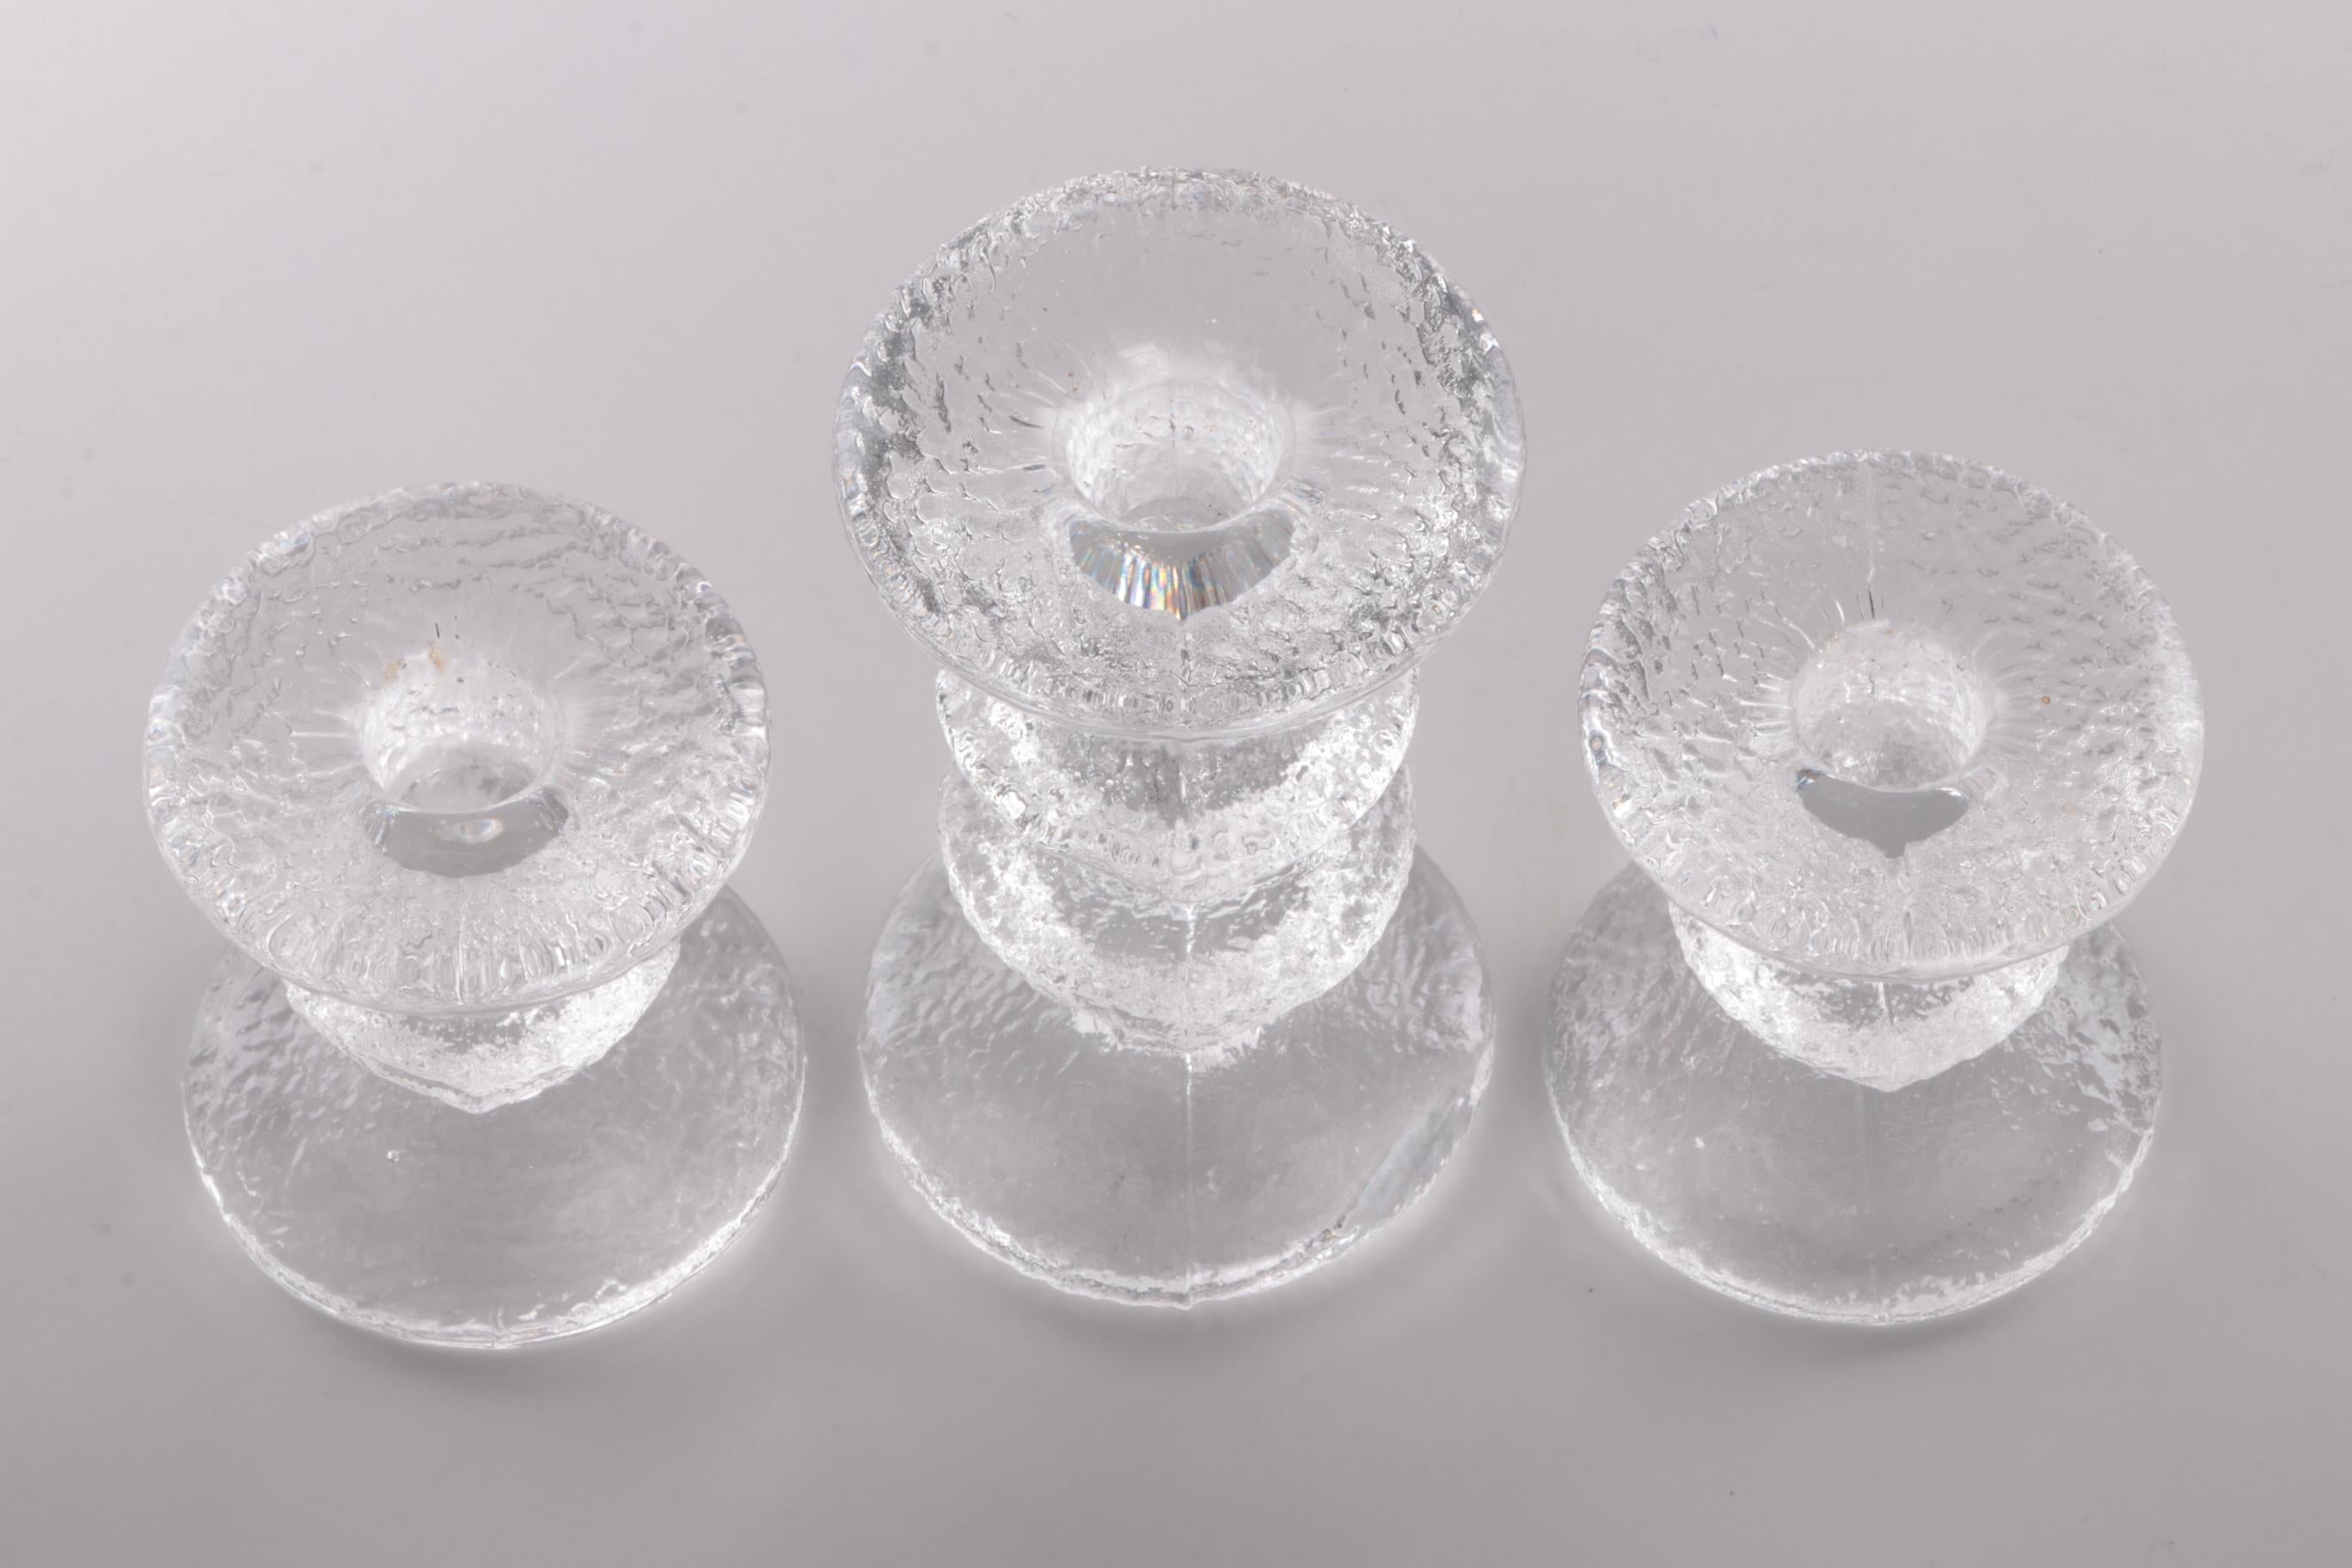 Art Glass 3 Littala Festivo Candle Holders Designed by Timo Sarpaneva